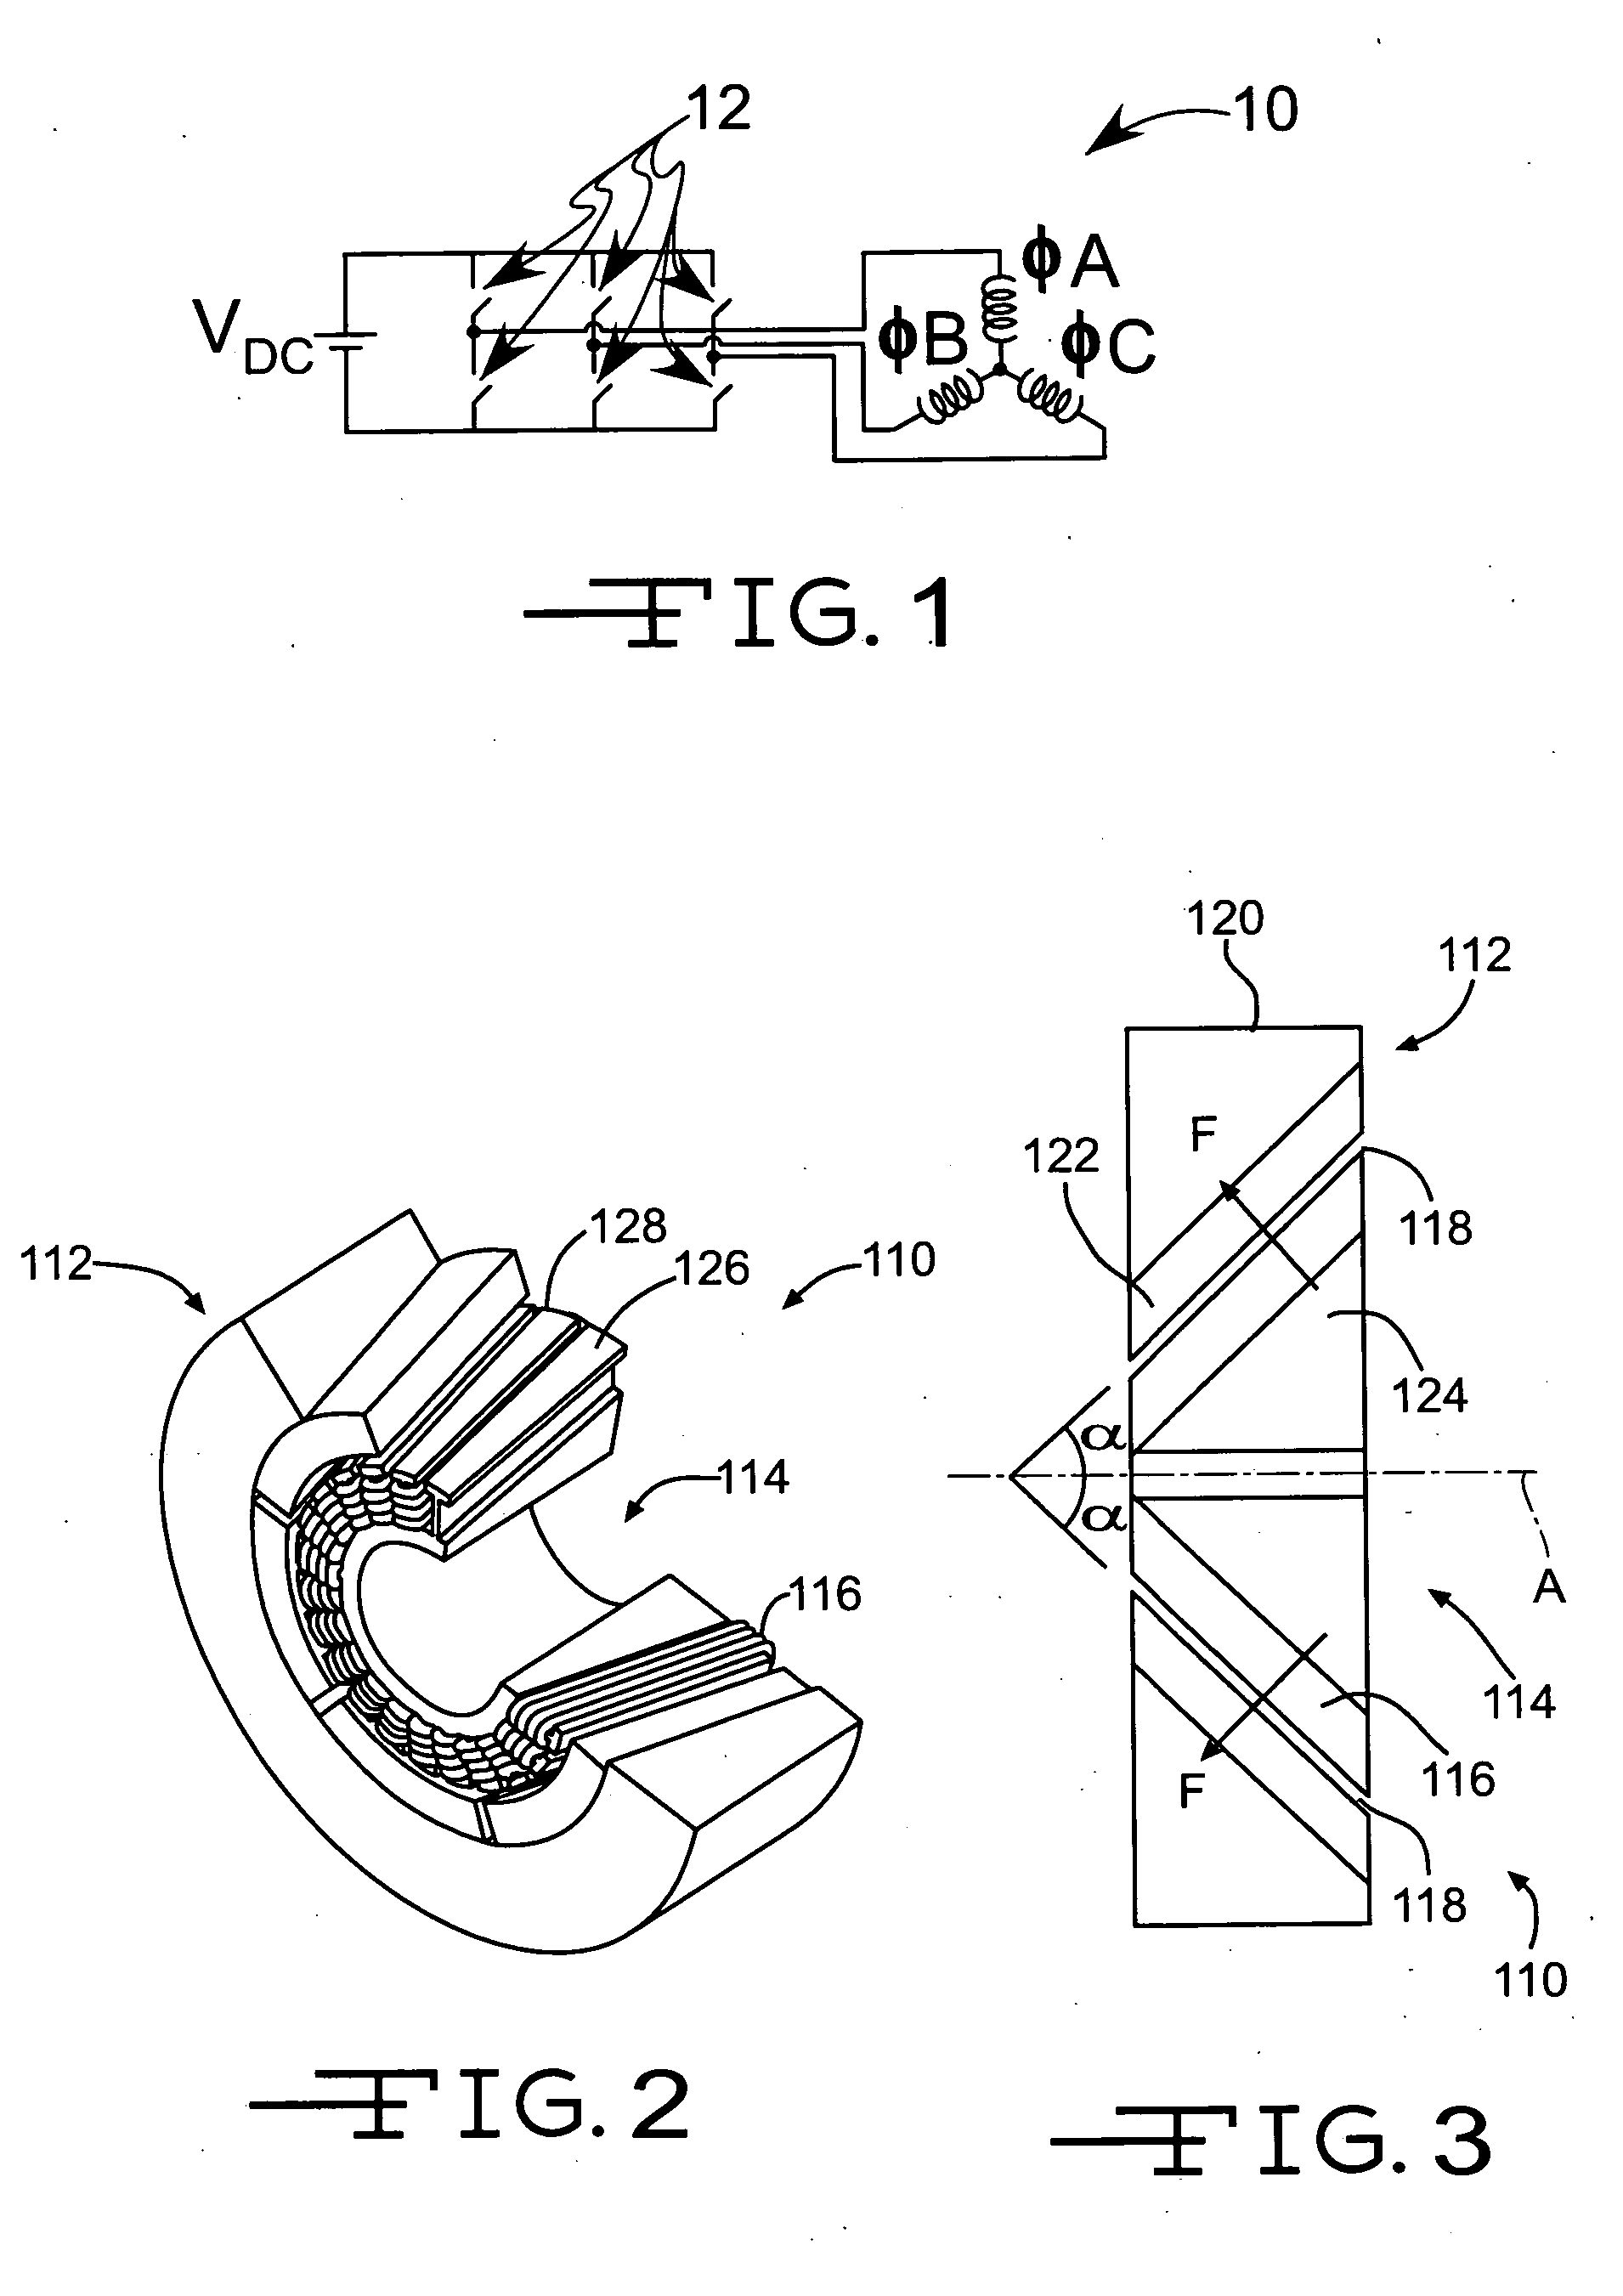 Conical bearingless motor/generator